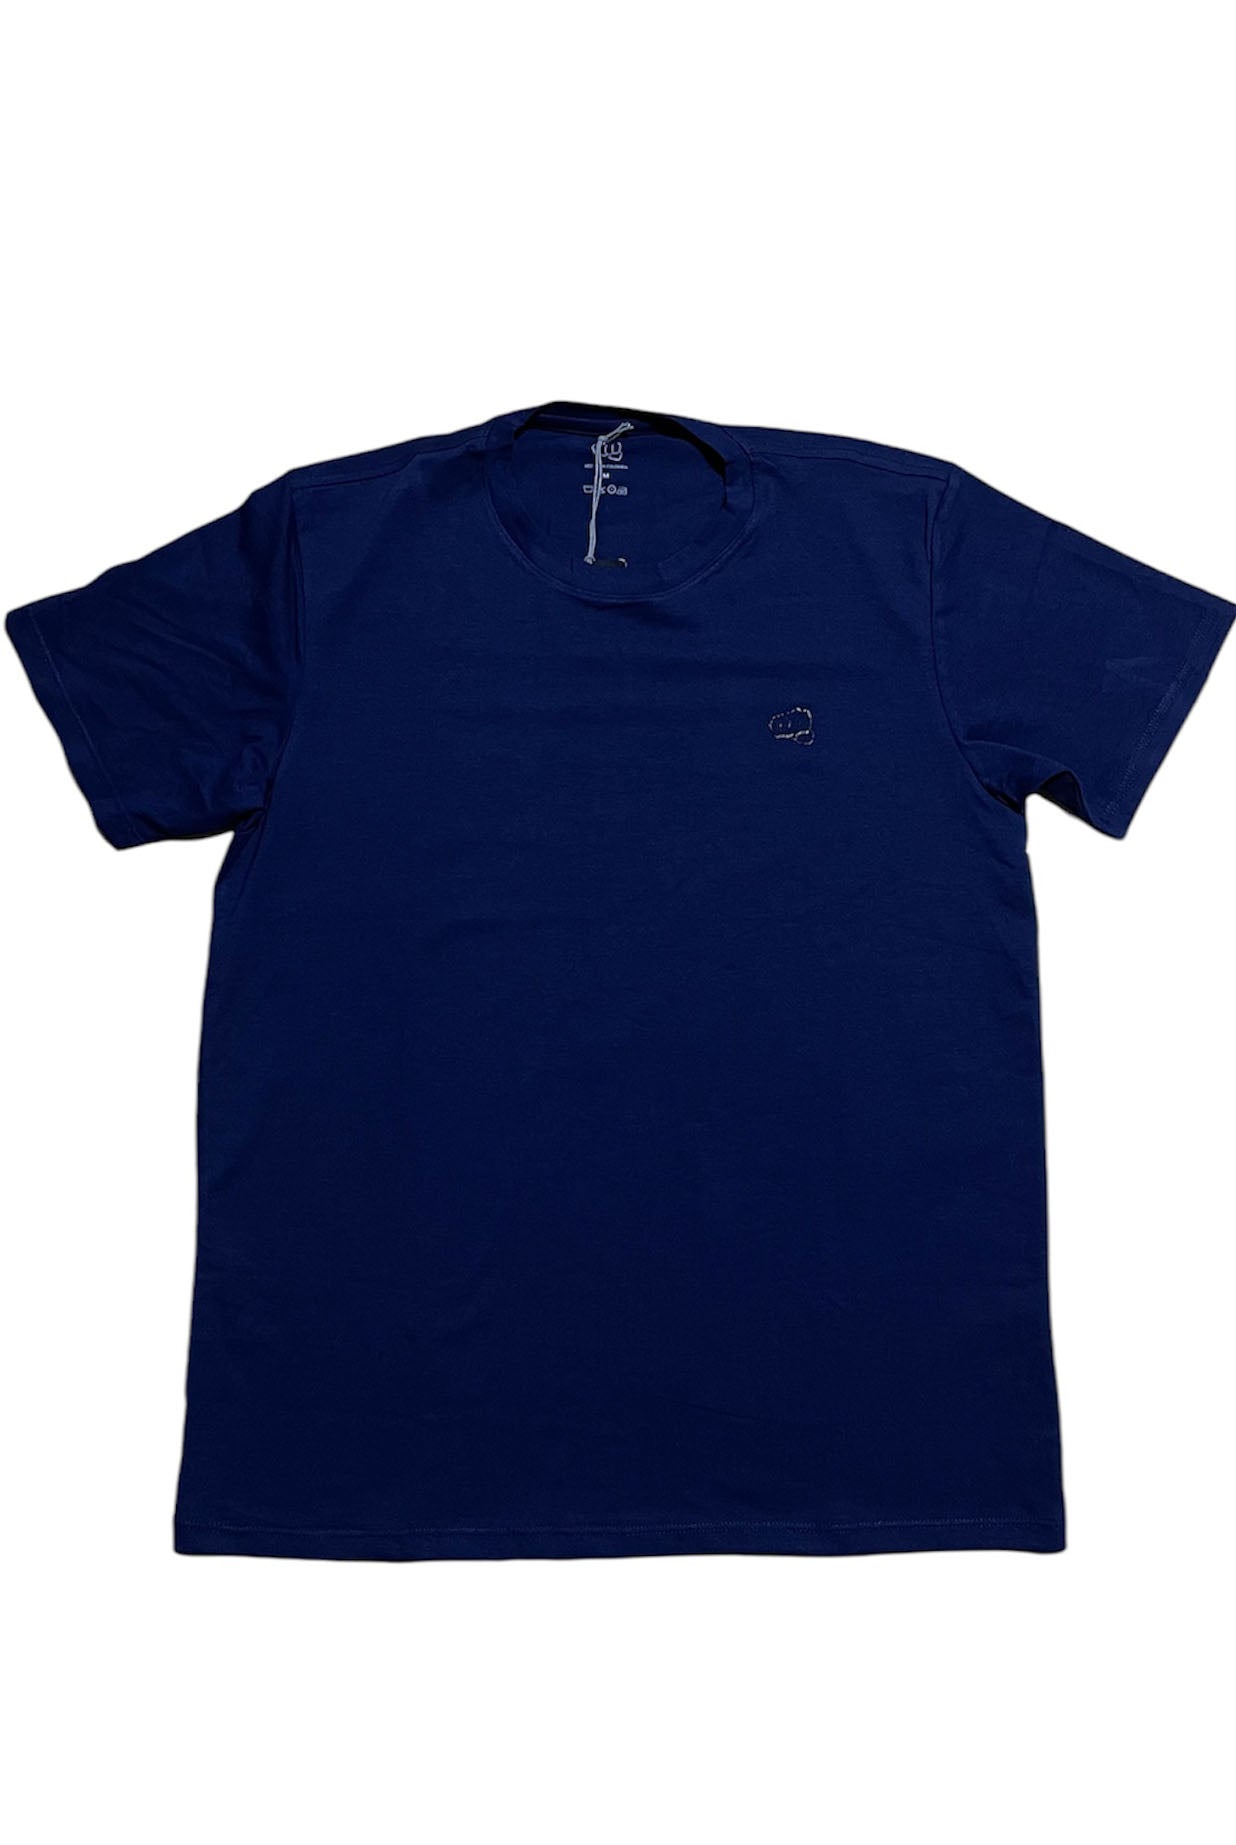 Camiseta Fist Ovy Azul